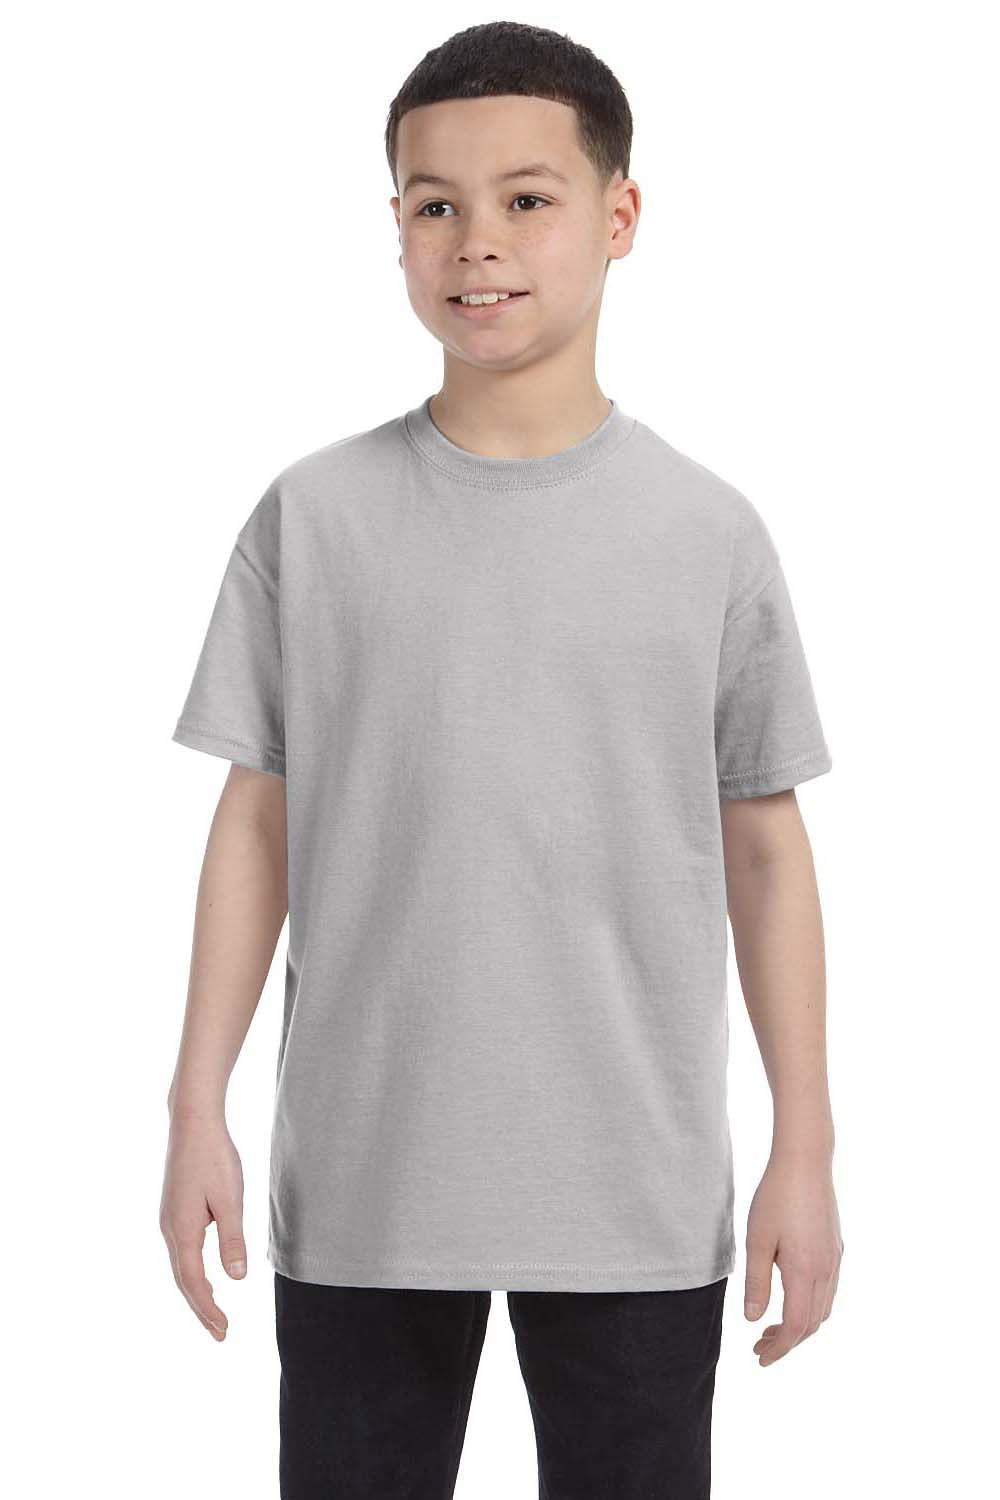 Hanes 54500 Youth ComfortSoft Short Sleeve Crewneck T-Shirt Light Steel Grey Front